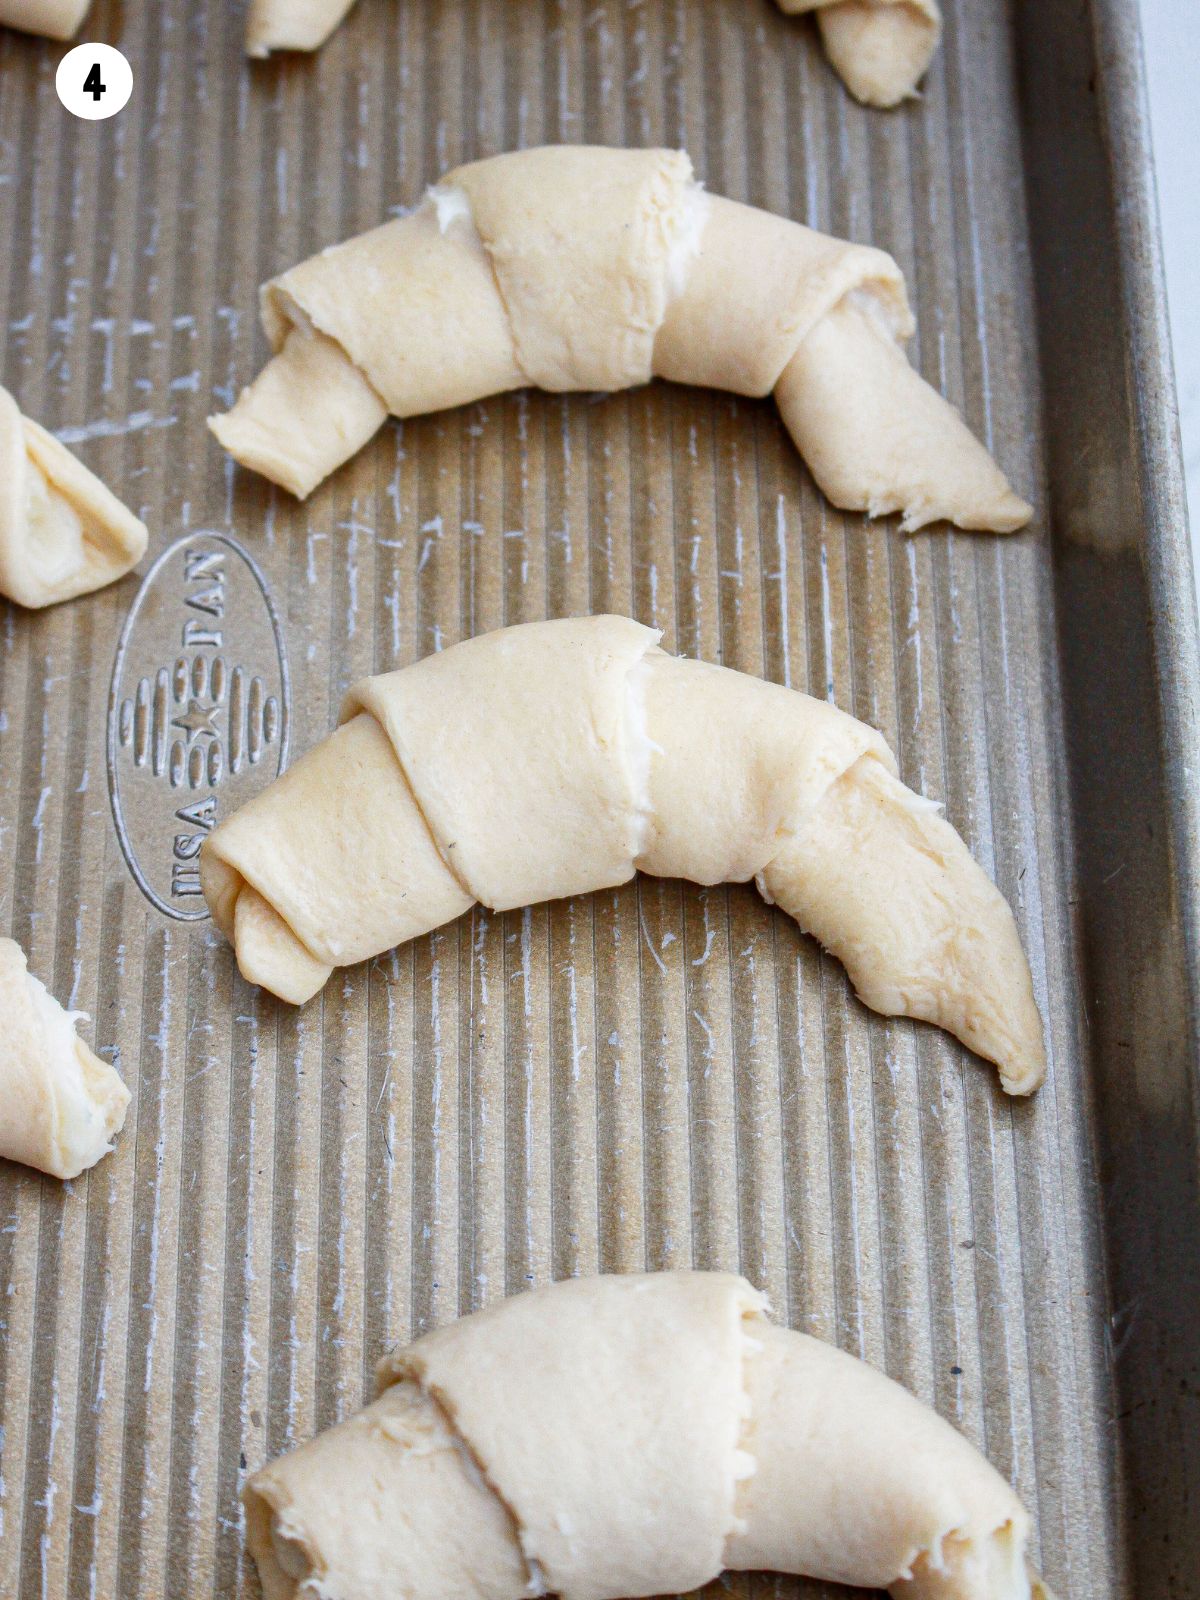 crescent rolls on baking sheet before baking.